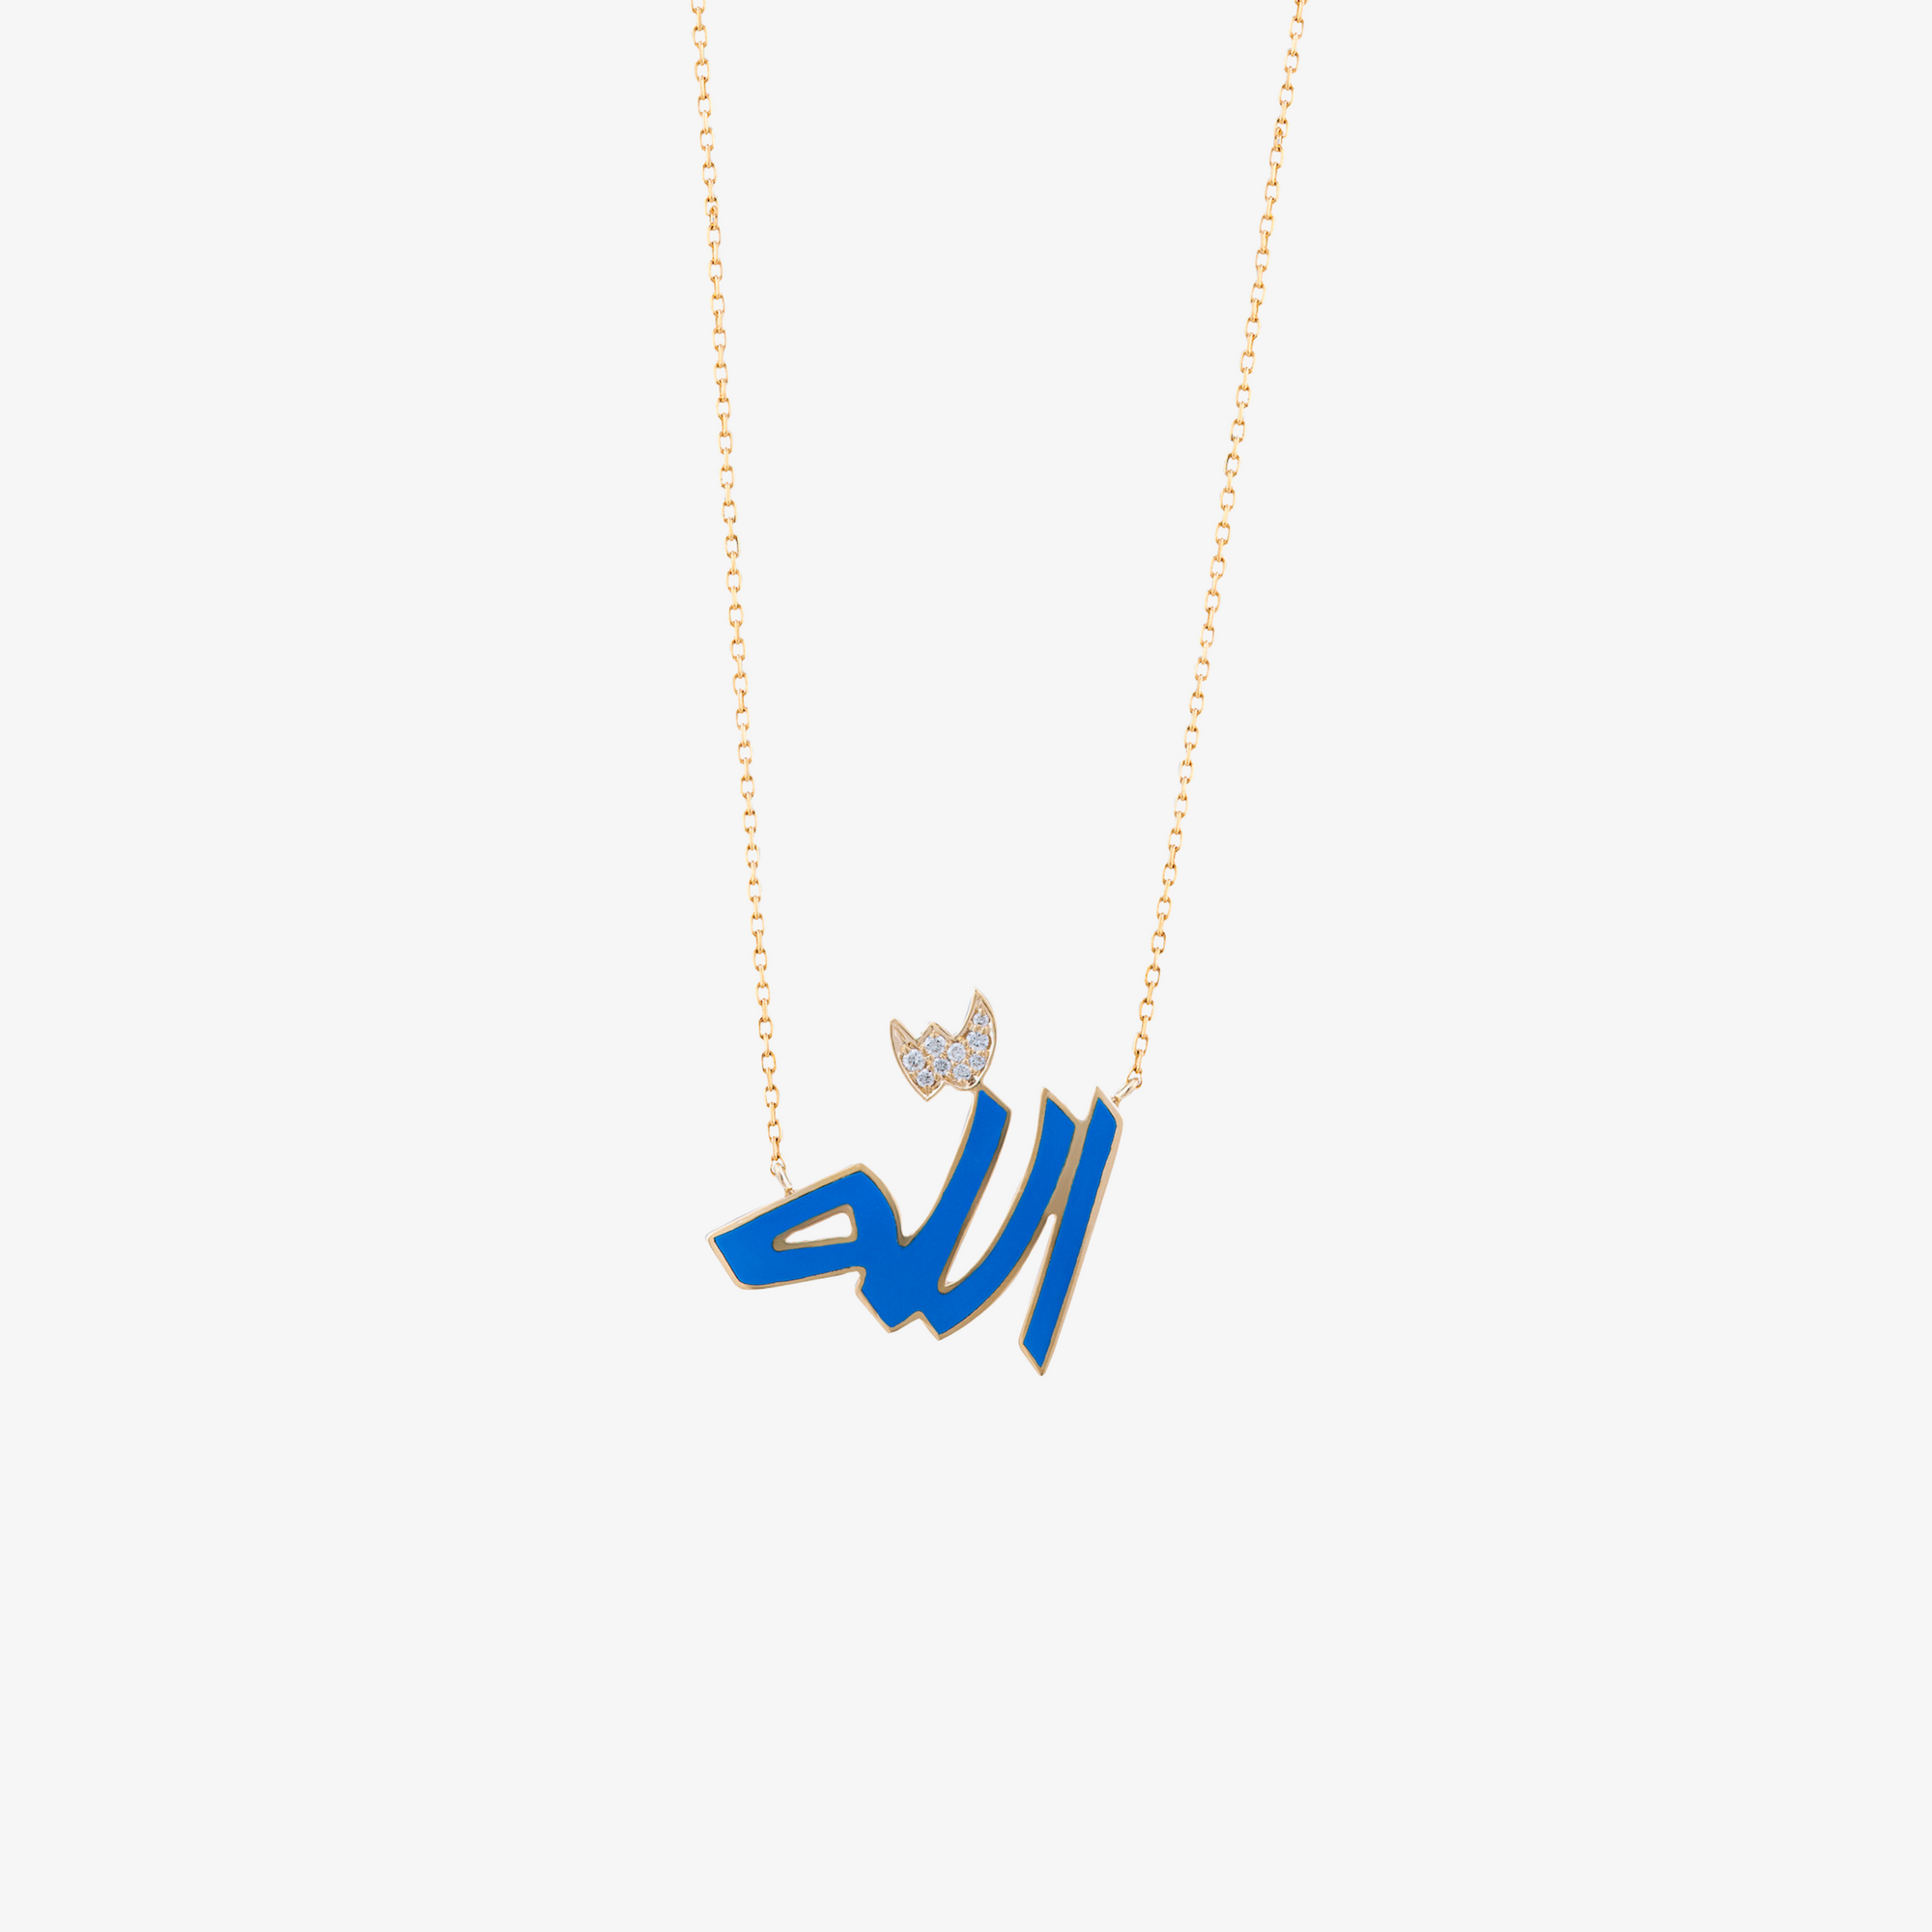 OULA - 18K Gold & Enamel "Allah" Necklace